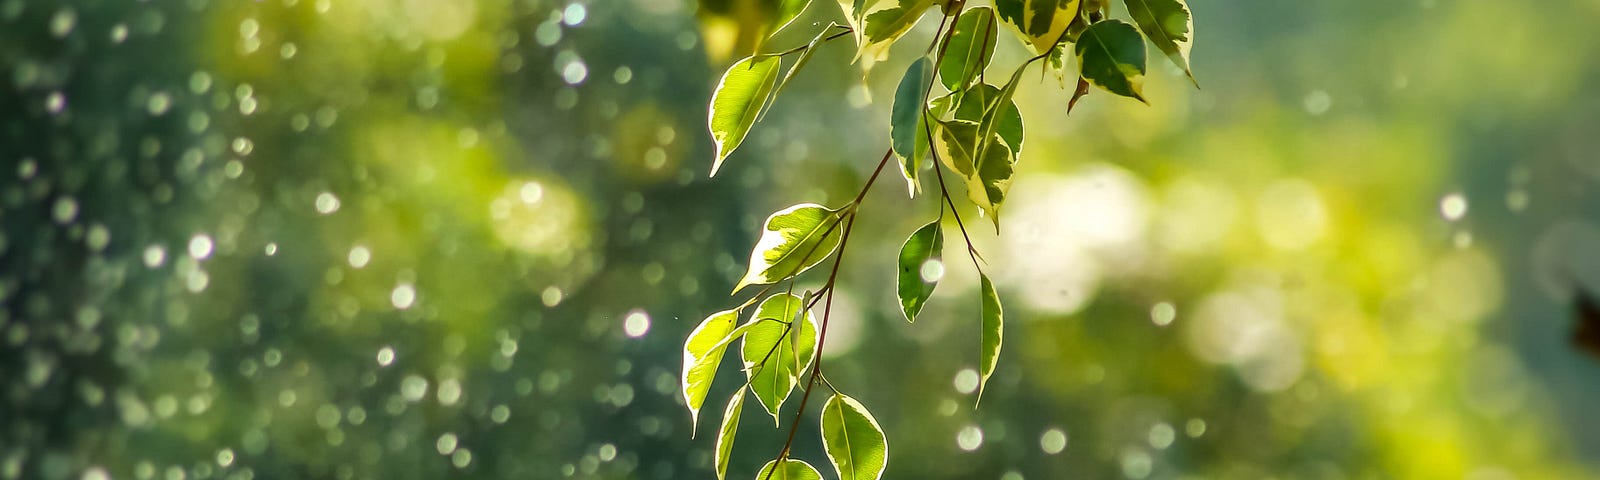 rain, branches, tree, green, water